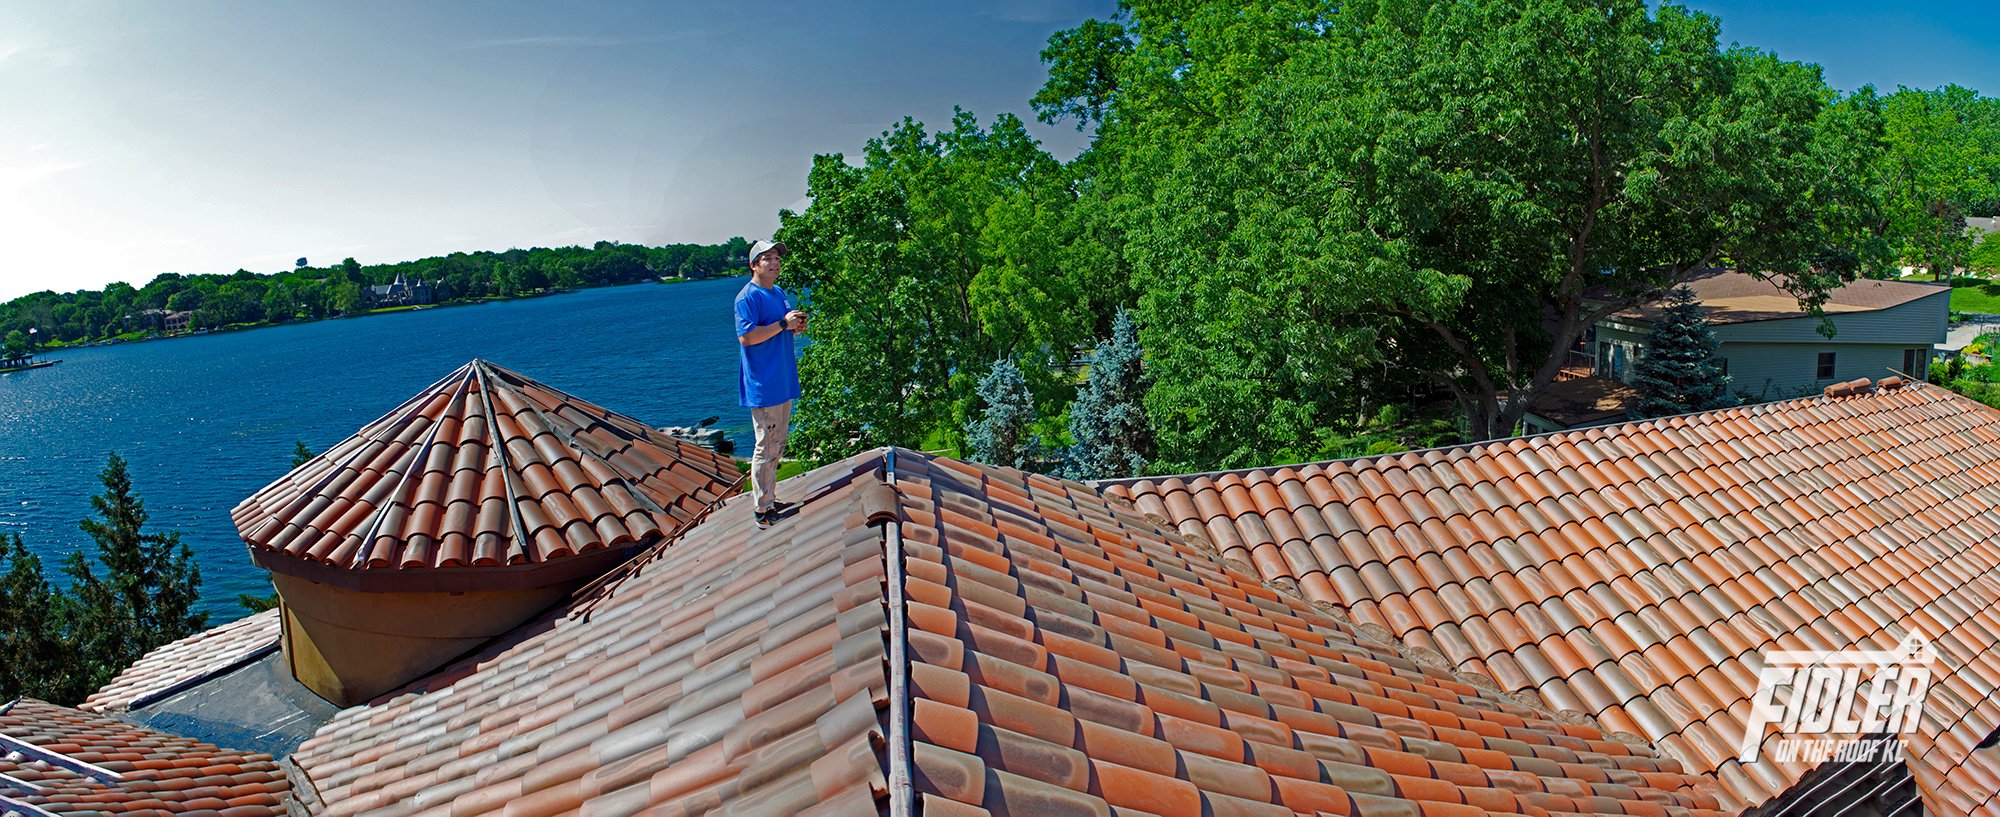 Fidler on the Roof KC Clay Tile Roofing.jpg